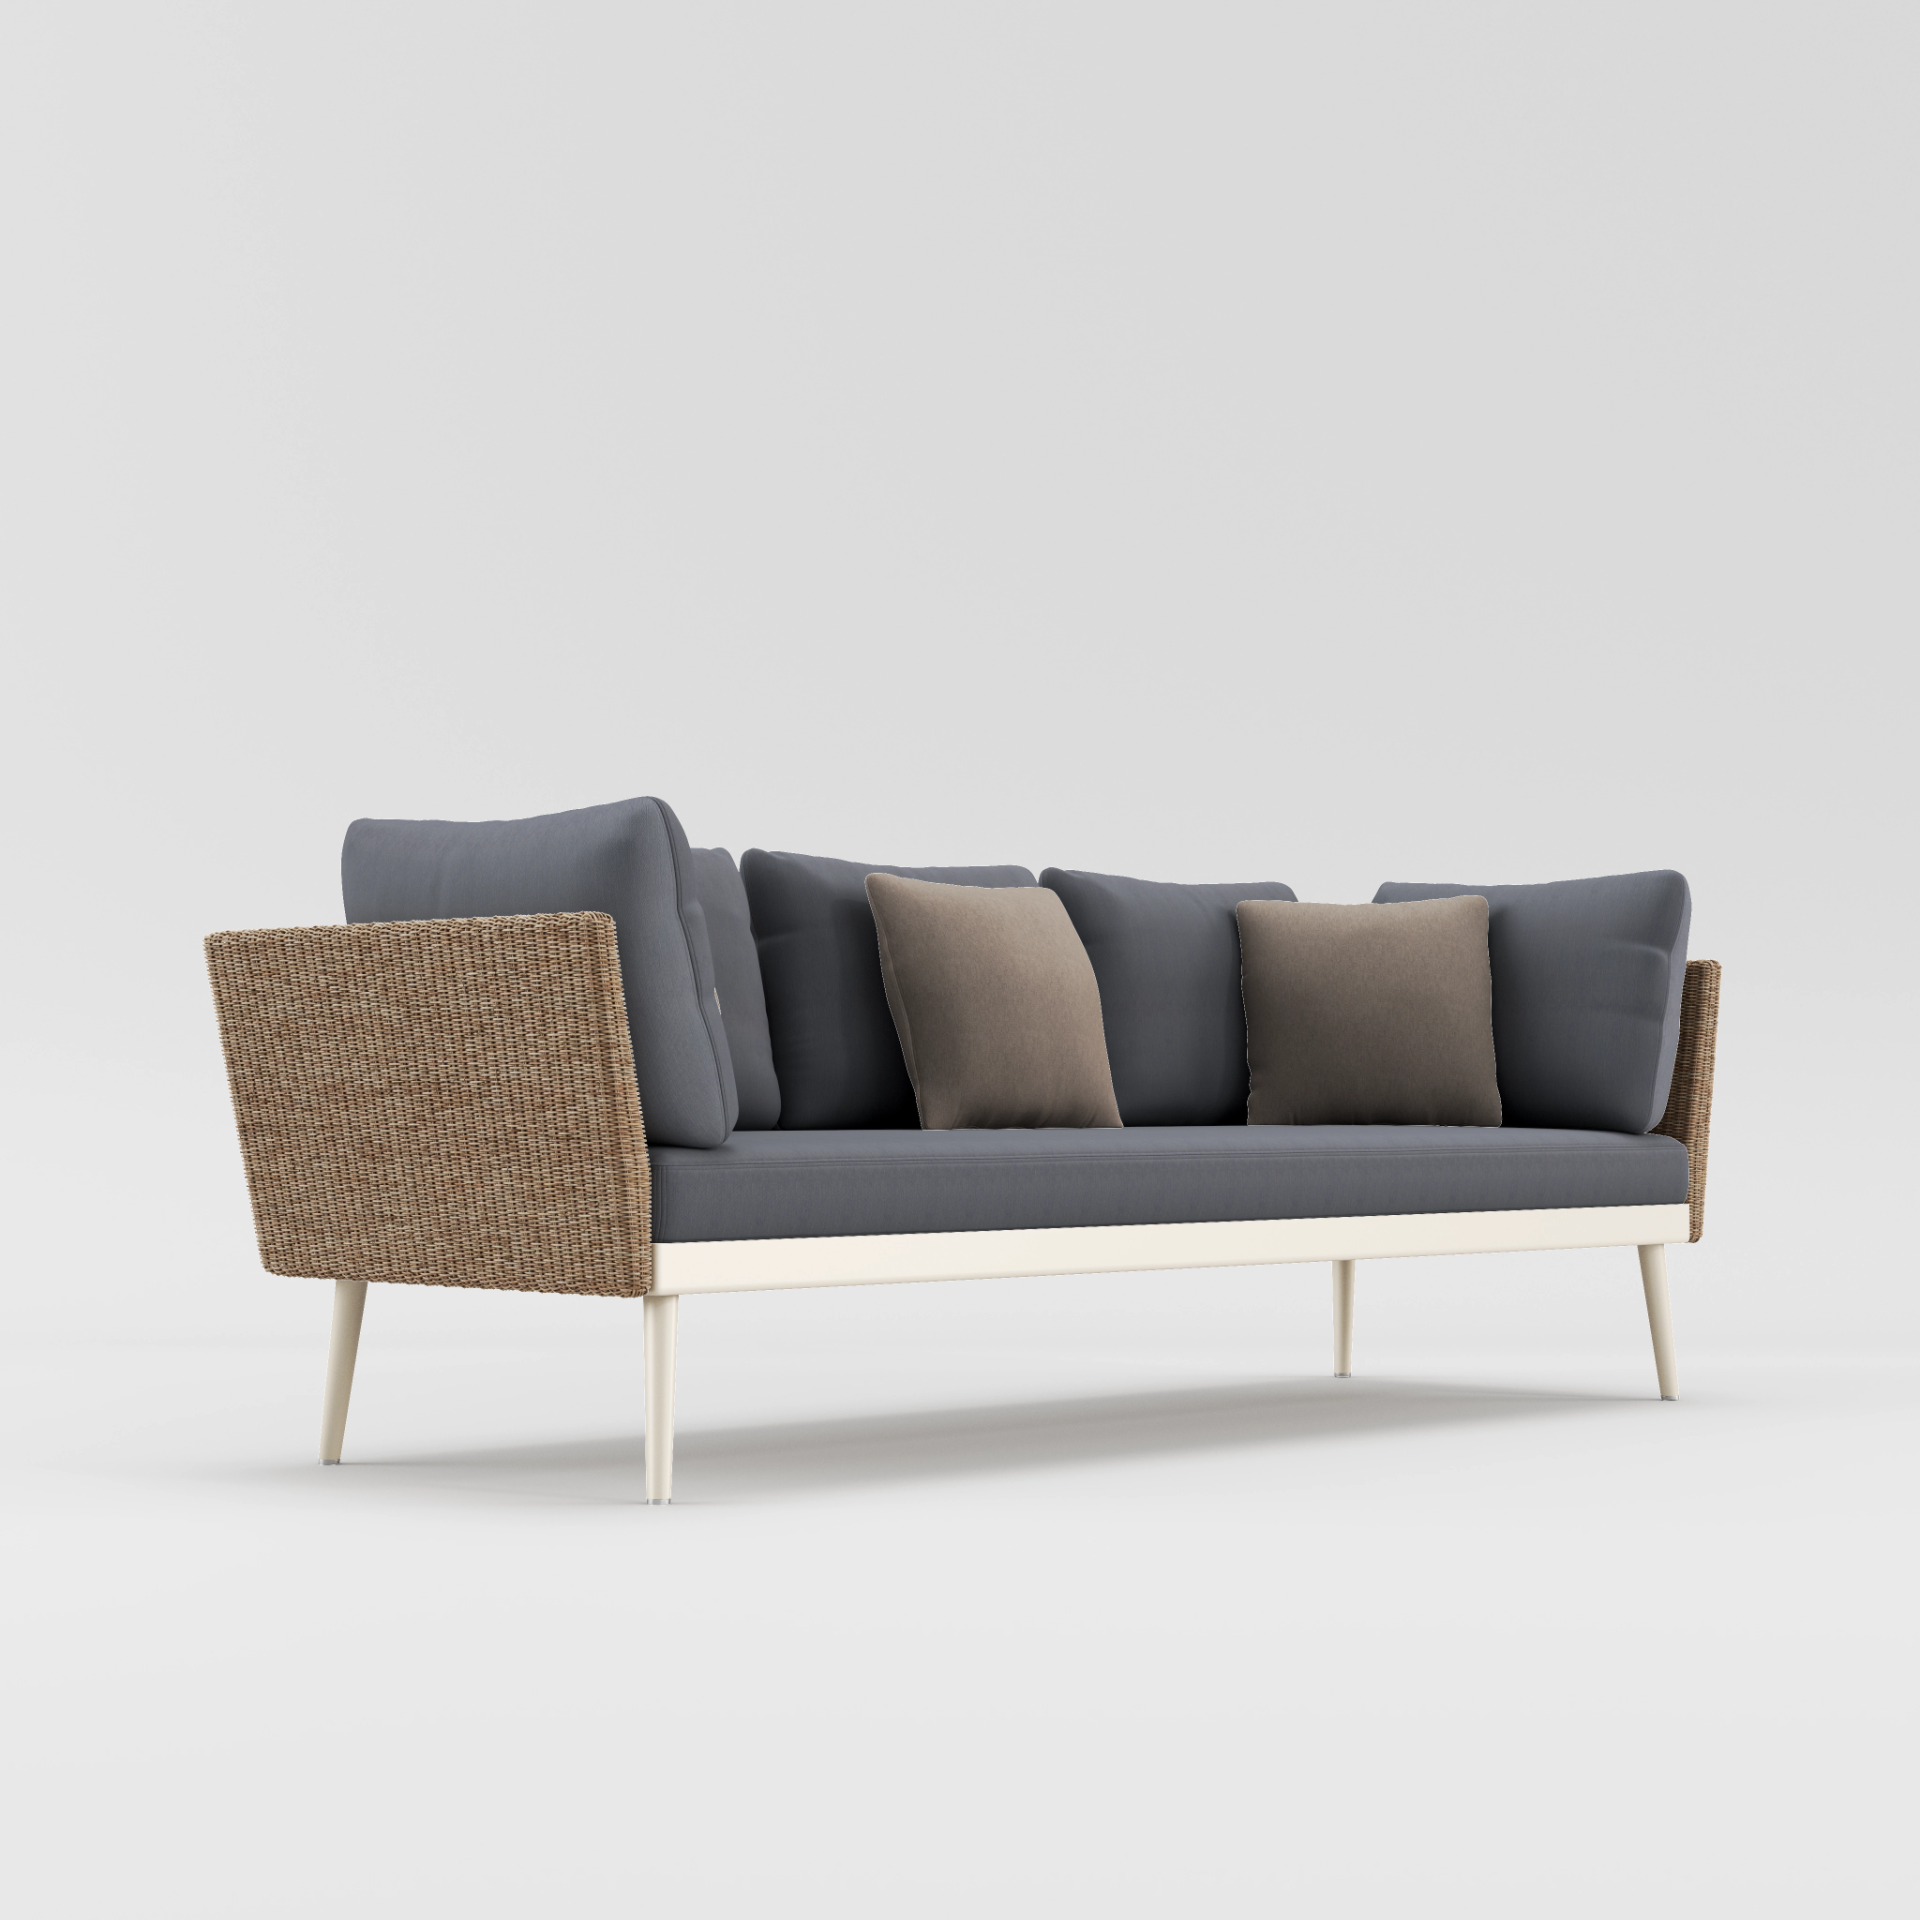 20TWENTY Sofa by Brown Jordan